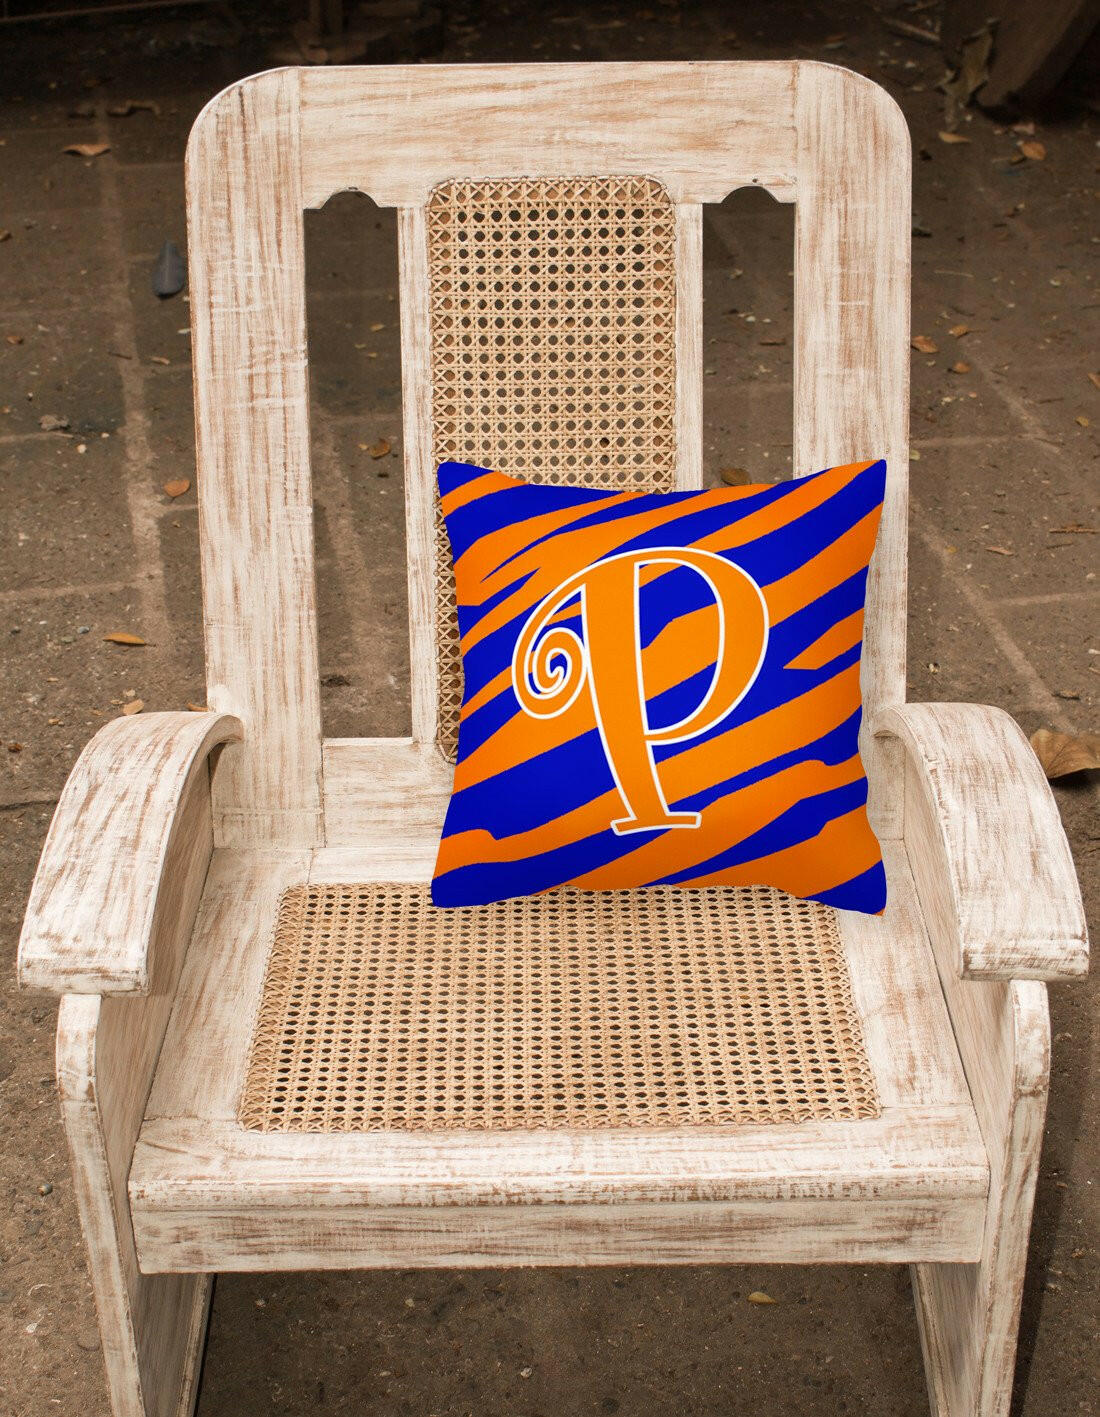 Monogram Initial P Tiger Stripe Blue and Orange Decorative Canvas Fabric Pillow - the-store.com